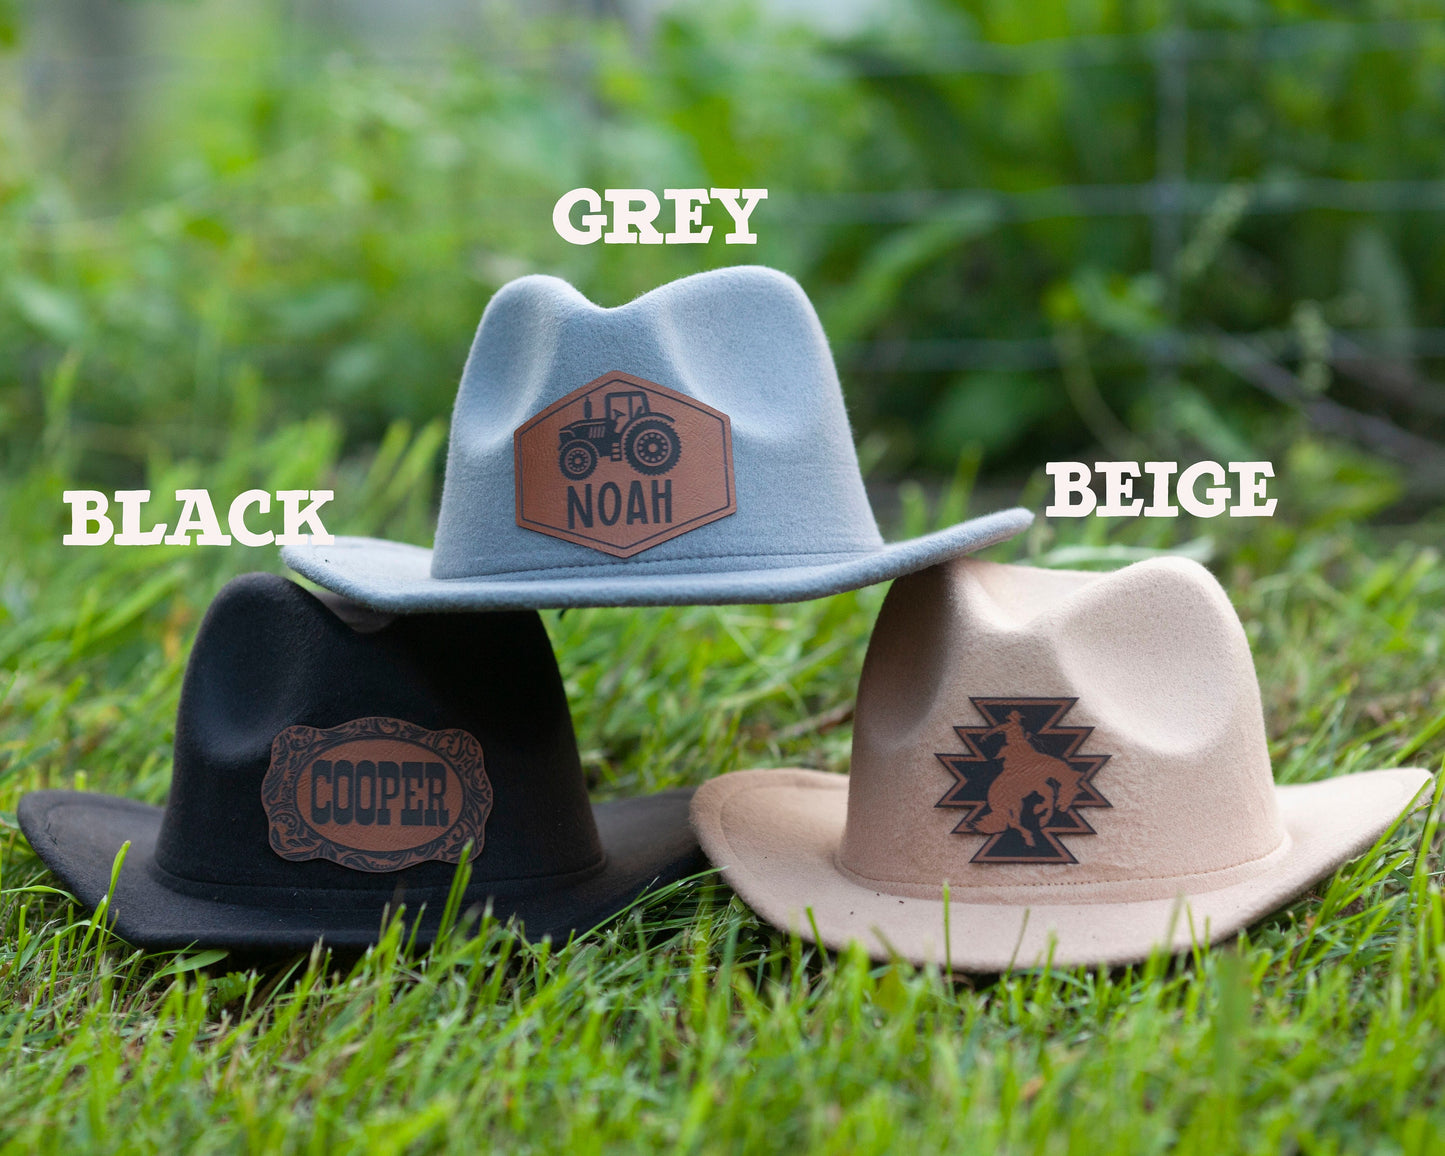 Cowboy Hat for kids, Kids cowboy hat, kids cowboy costume, leather patch hat, belt buckle design, western kids